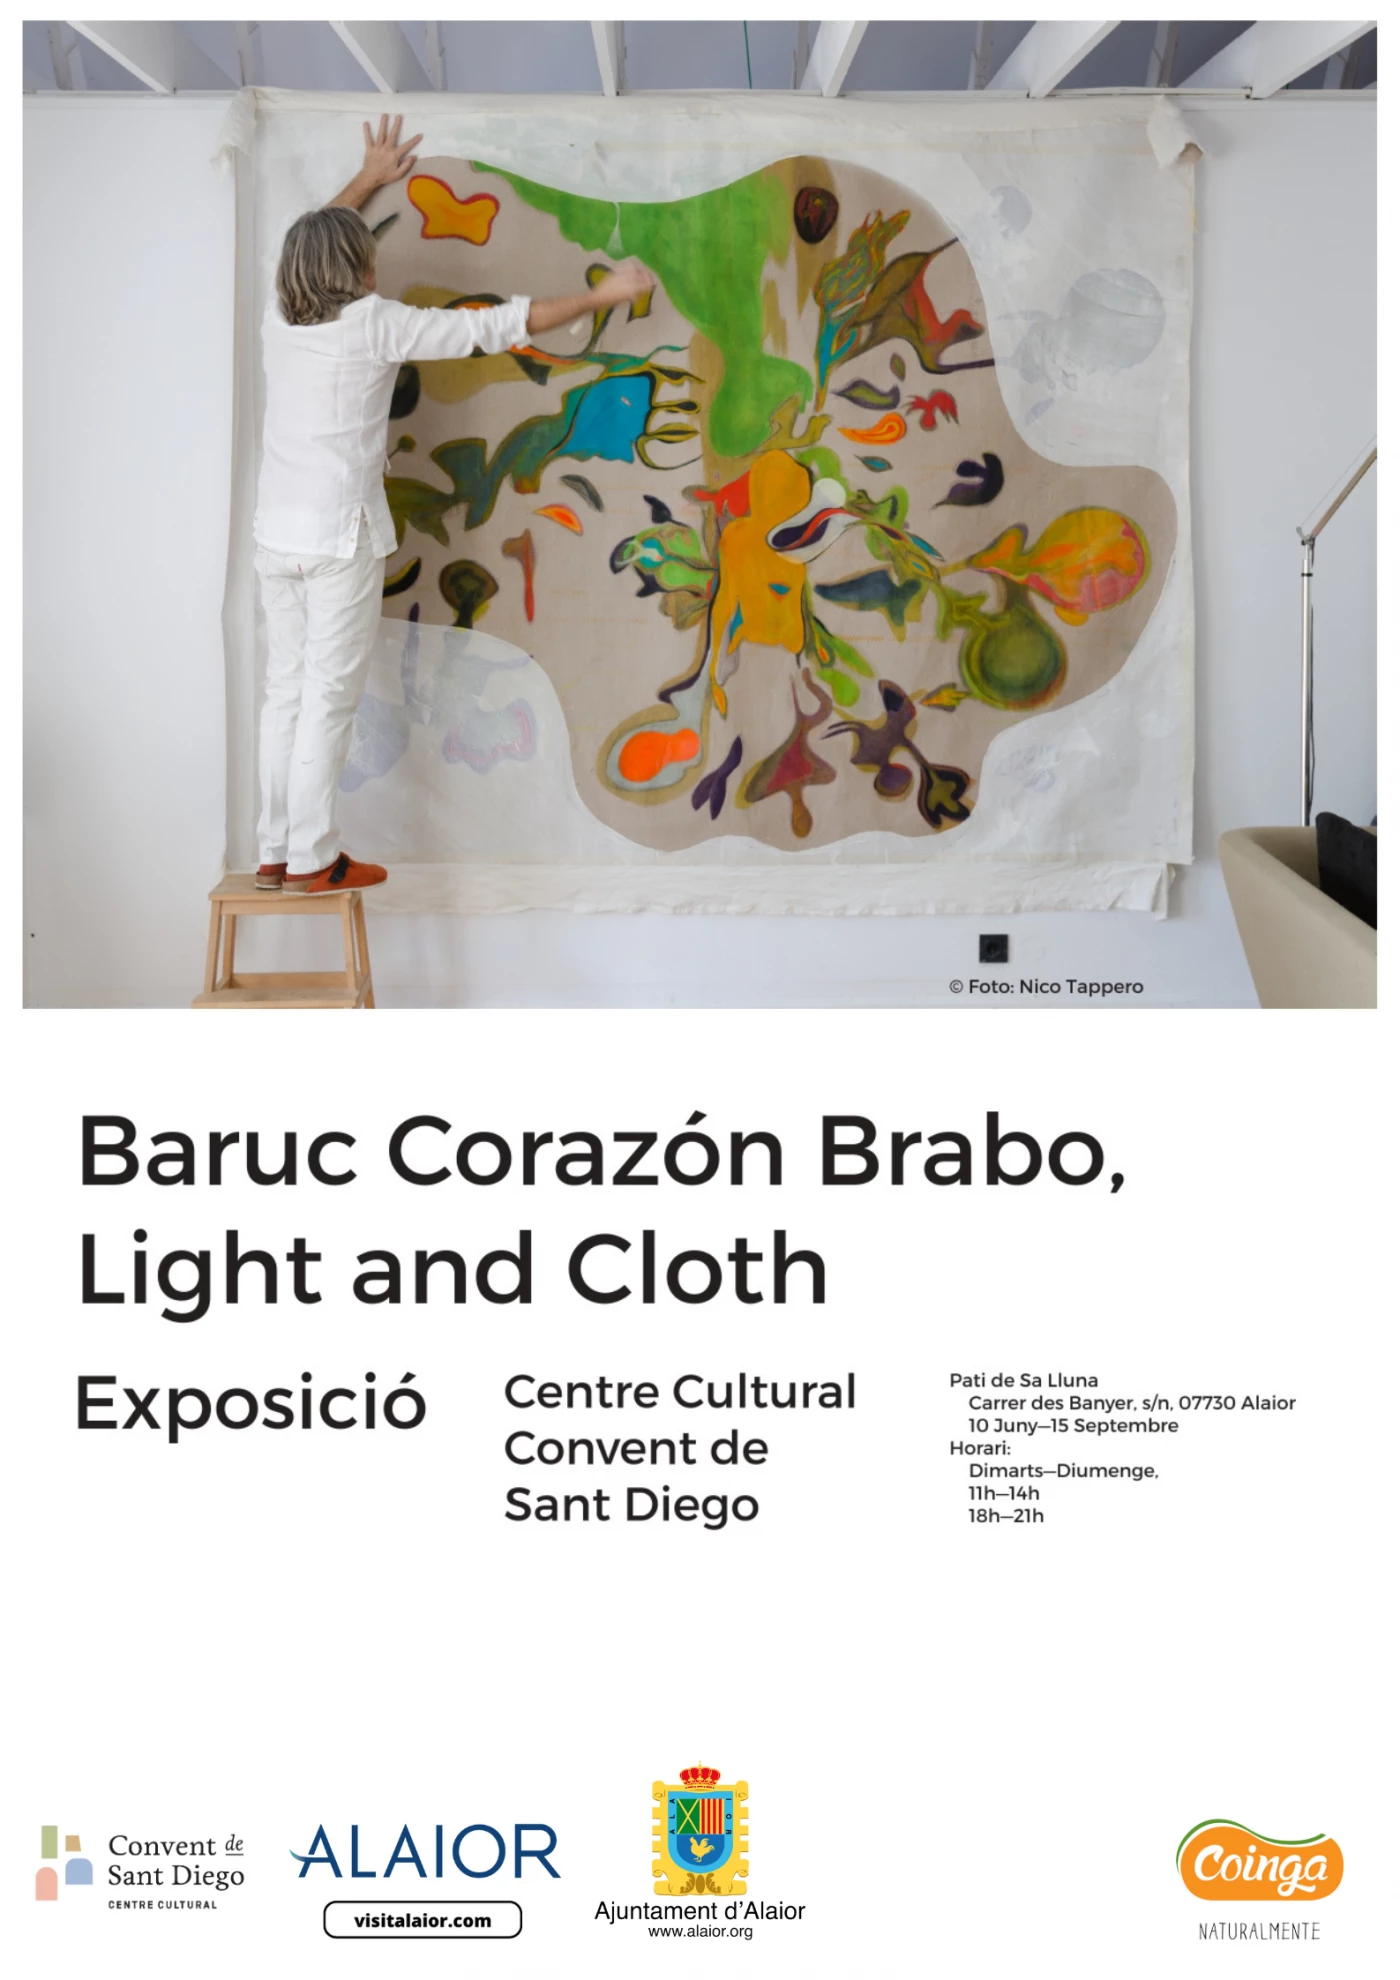 Imagen del evento Exposición "Heart, Light and Cloth" de Baruc